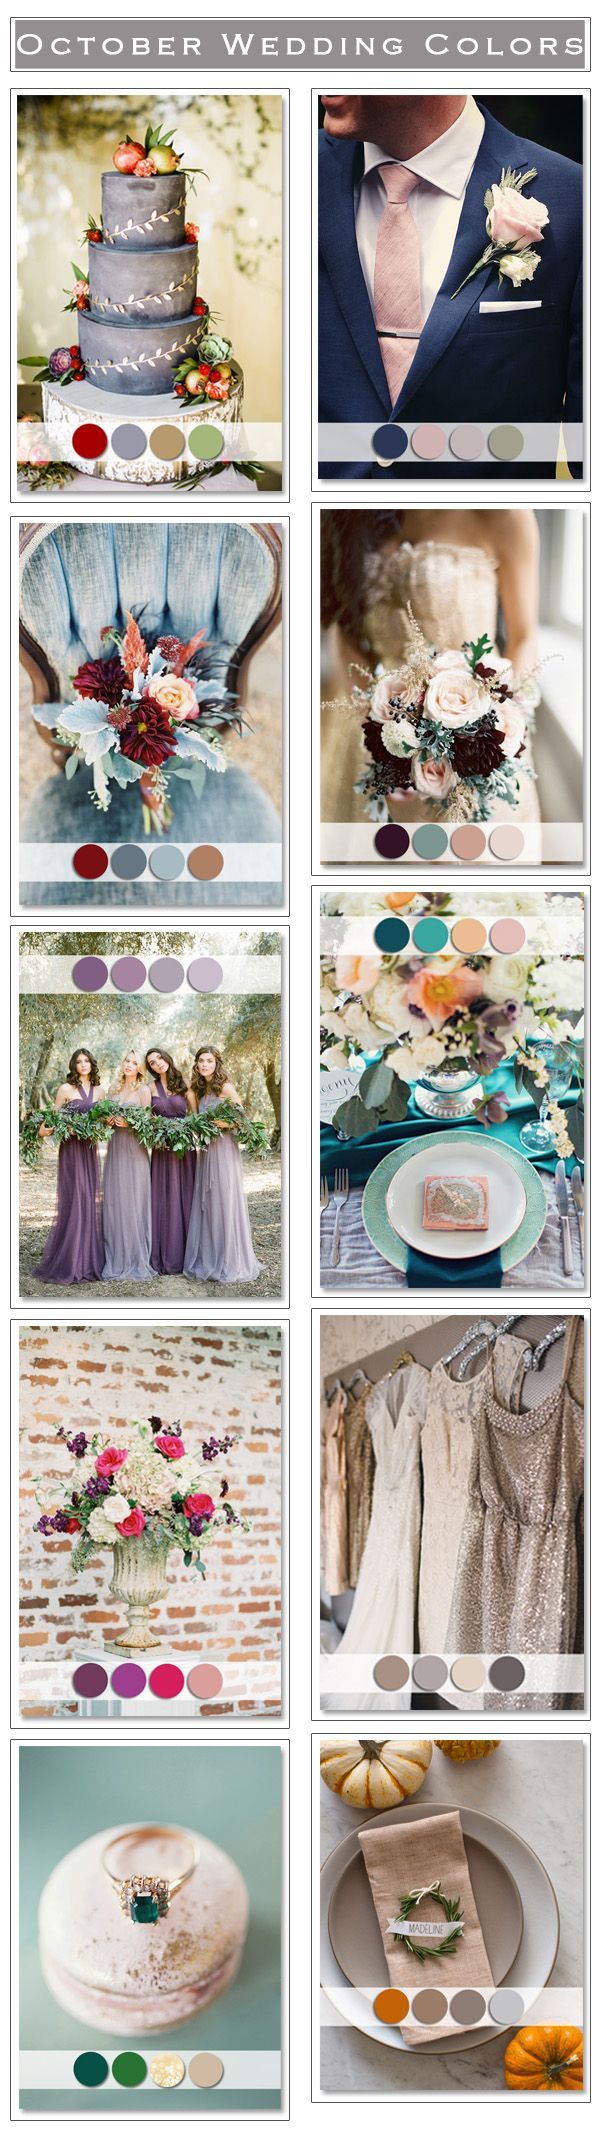 top 10 October wedding color ideas for fall brides